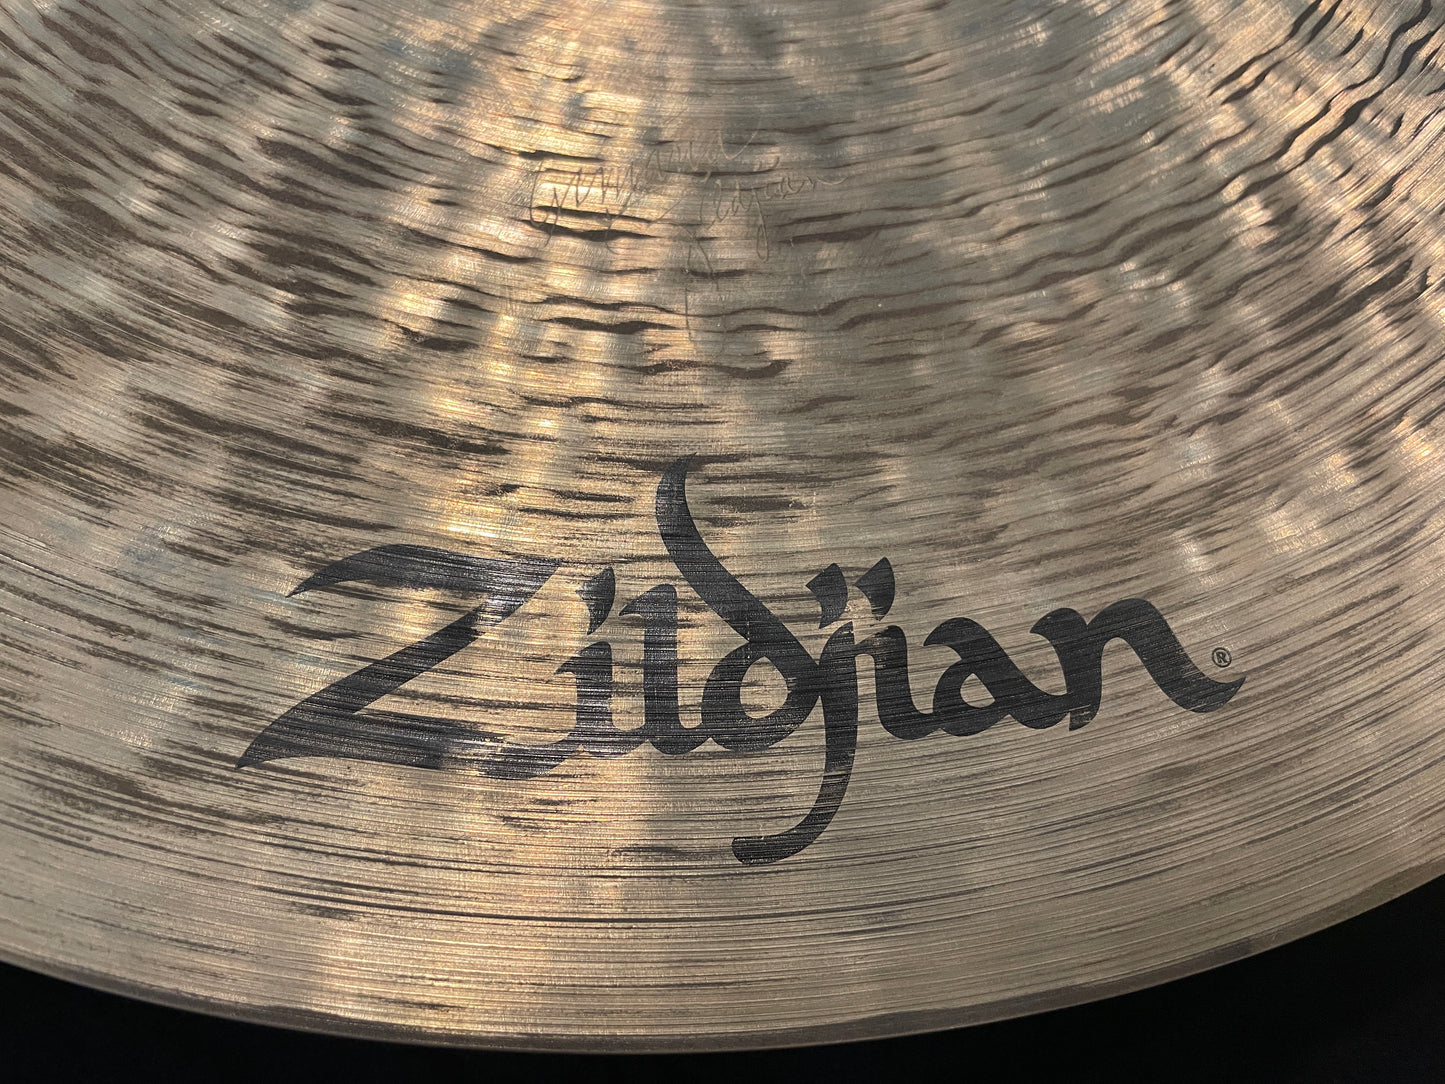 22" Zildjian 1990s K Constantinople Ride Cymbal 2480g